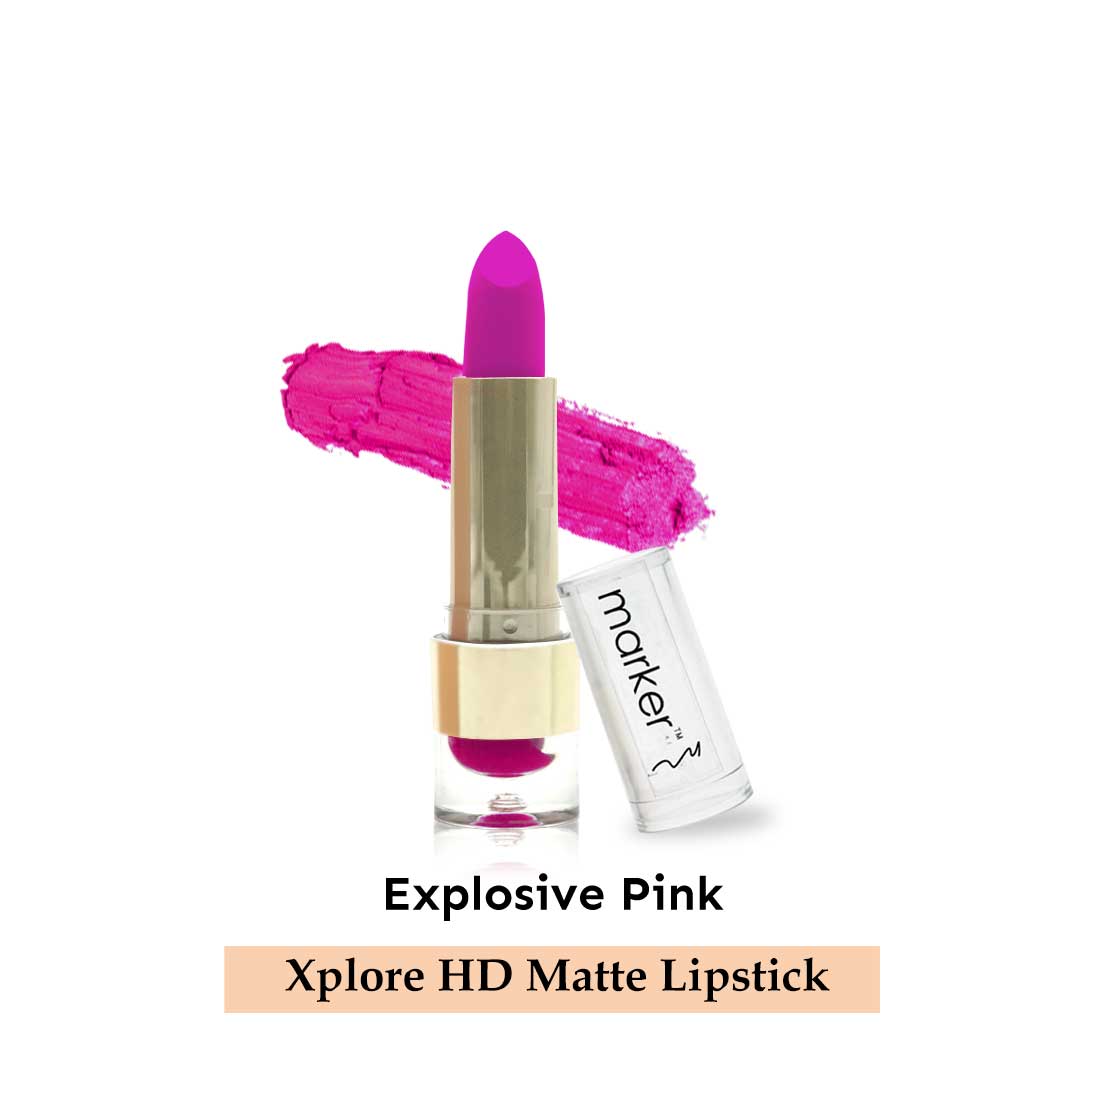 Xplore HD Matte Lipstick